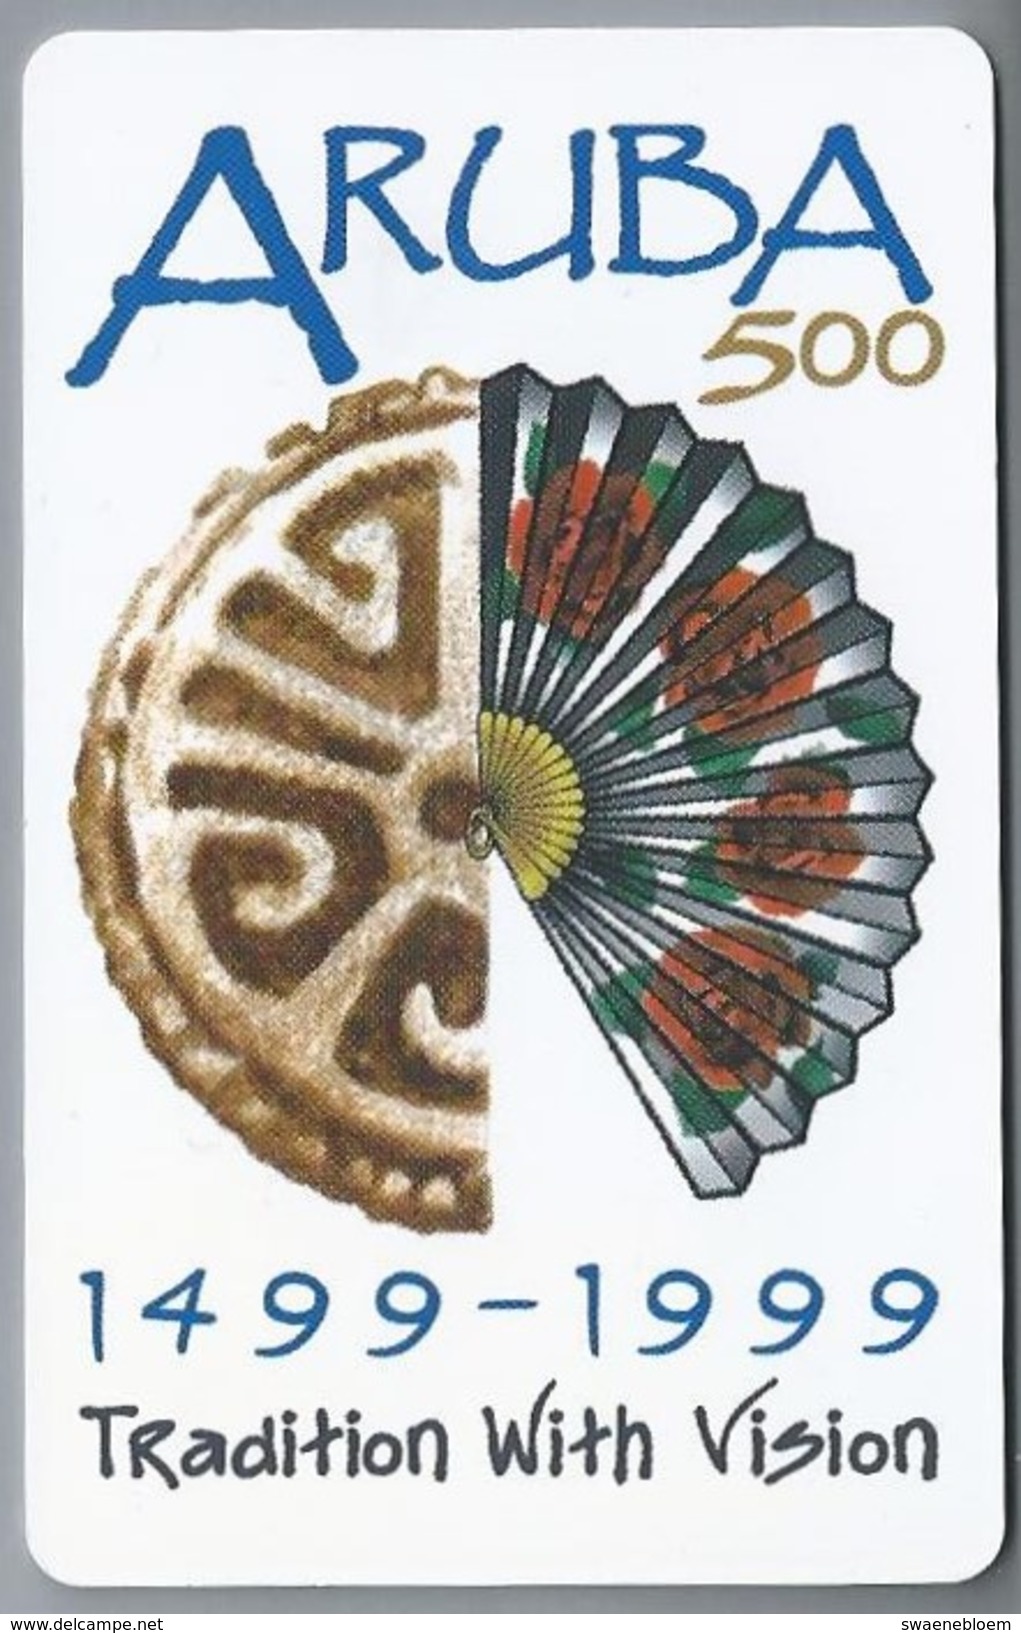 Telefoonkaart. Setar. Aruba 500. - 1499 - 1999. Tradition With Vision. 30 Units. 2 Scans - Aruba